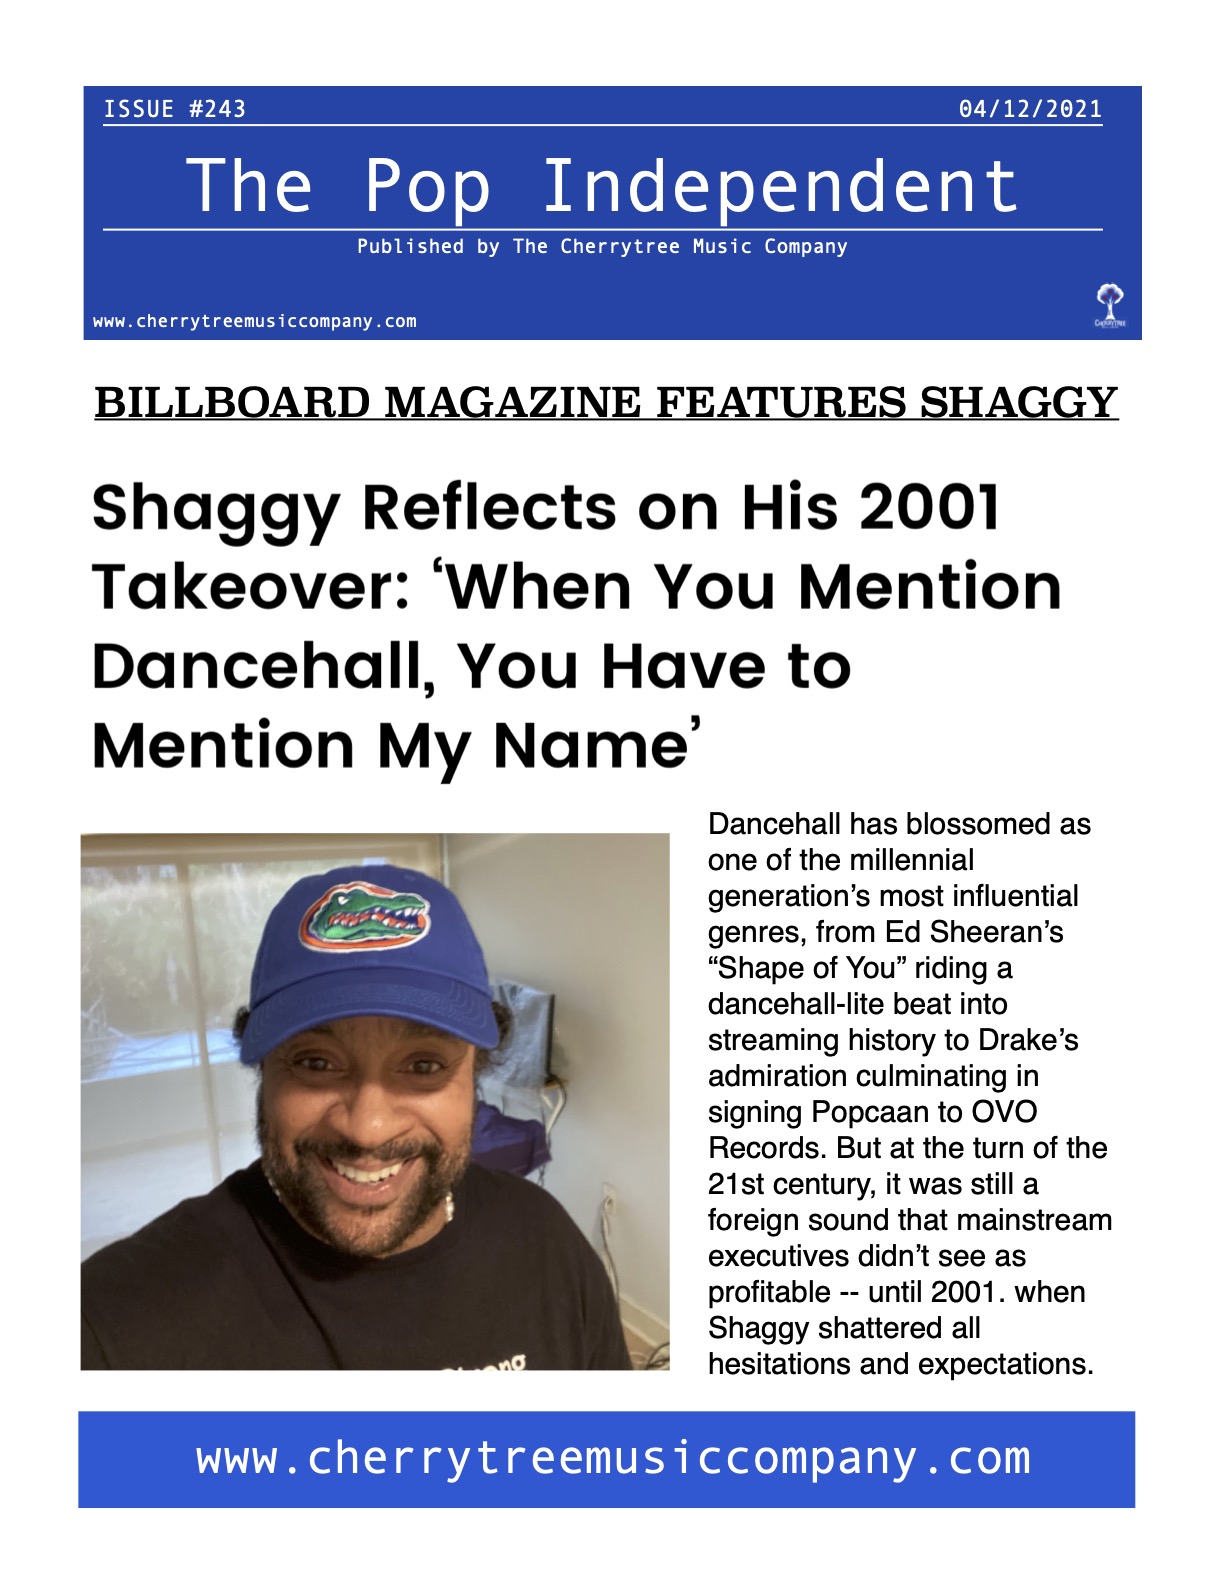 The Pop Alternative, Issue 243